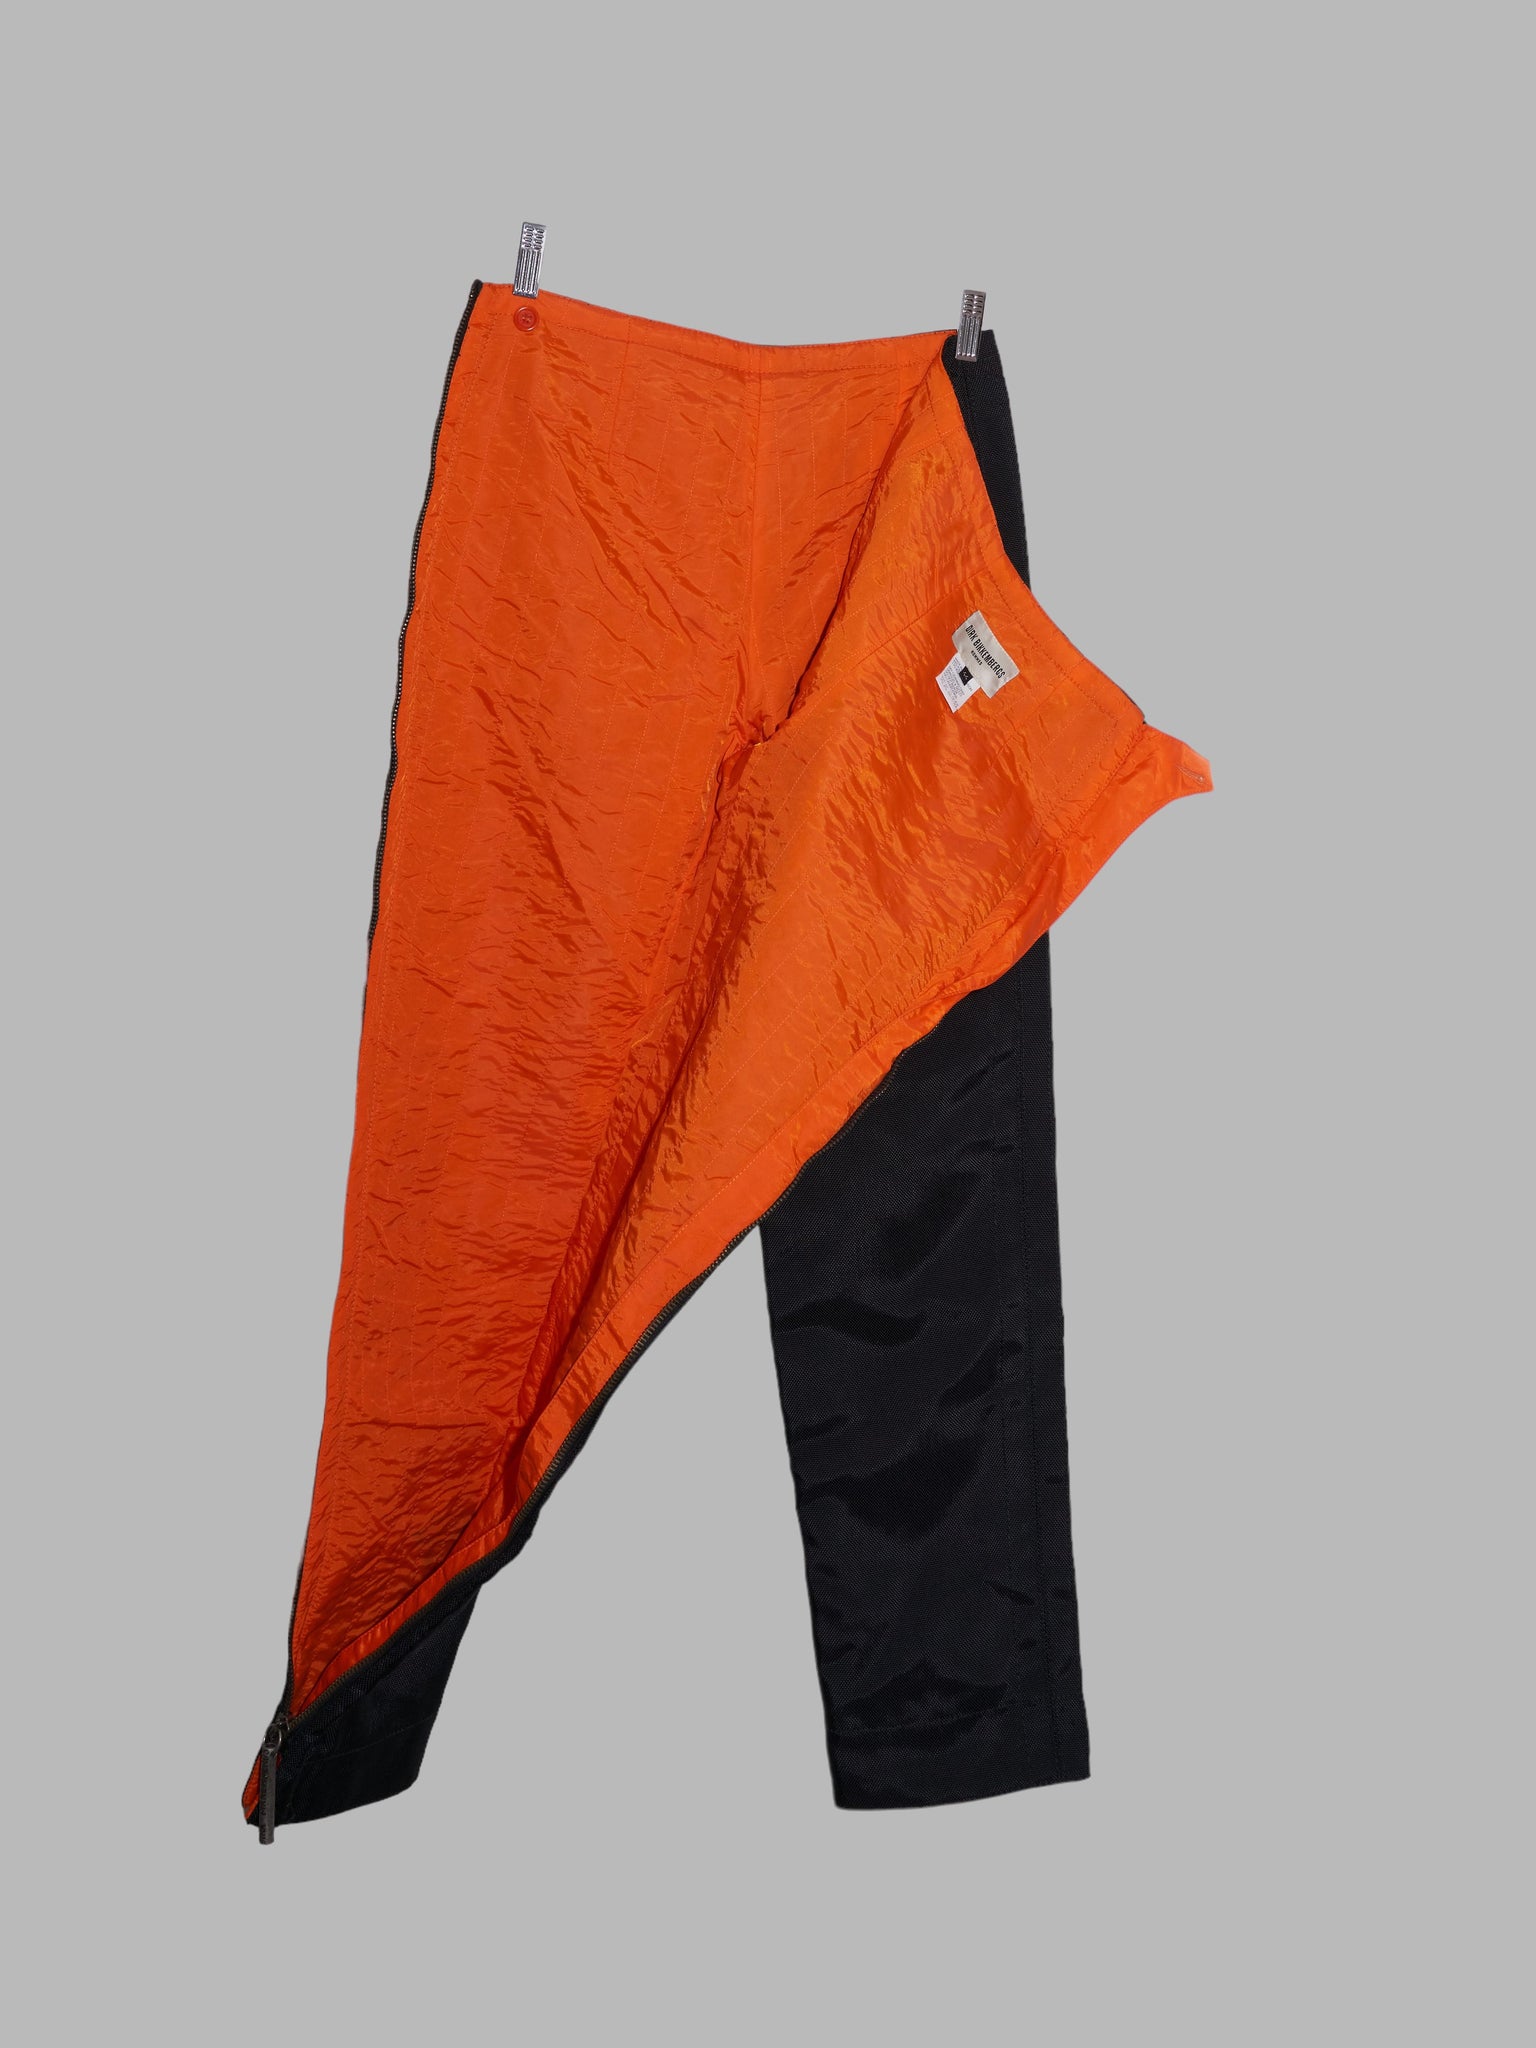 Dirk Bikkembergs Hommes 1990s black ballistic nylon quilted side zip trousers